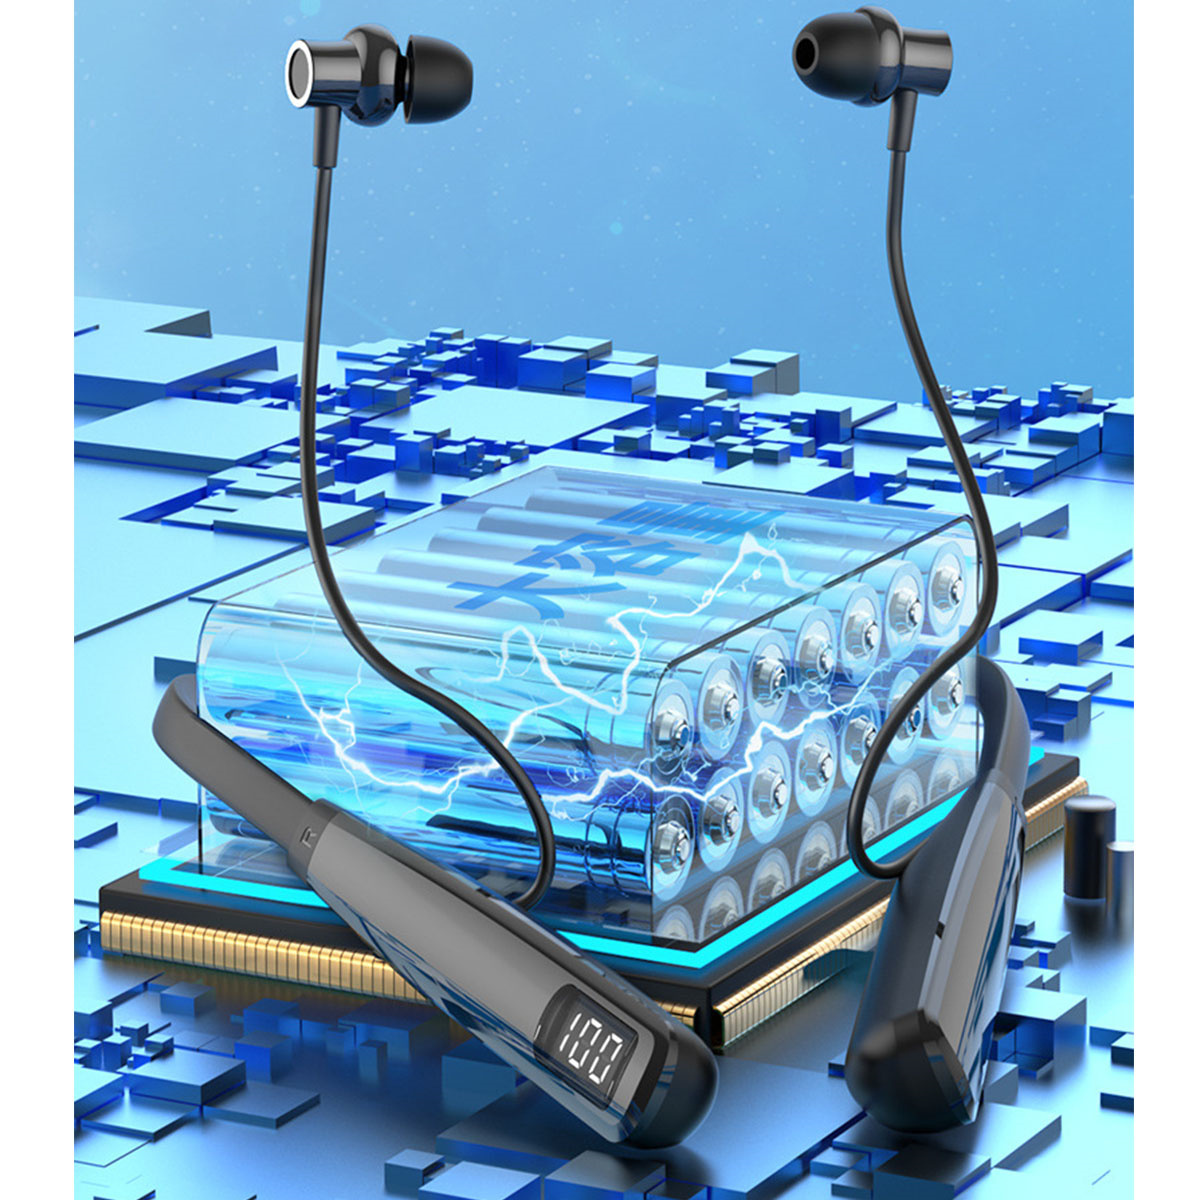 ENBAOXIN Bluetooth-Headset - In-ear ohne um Tragen den Schmerzen, Bluetooth langes Standby, Hals, langer Lila Bluetooth Kopfhörer